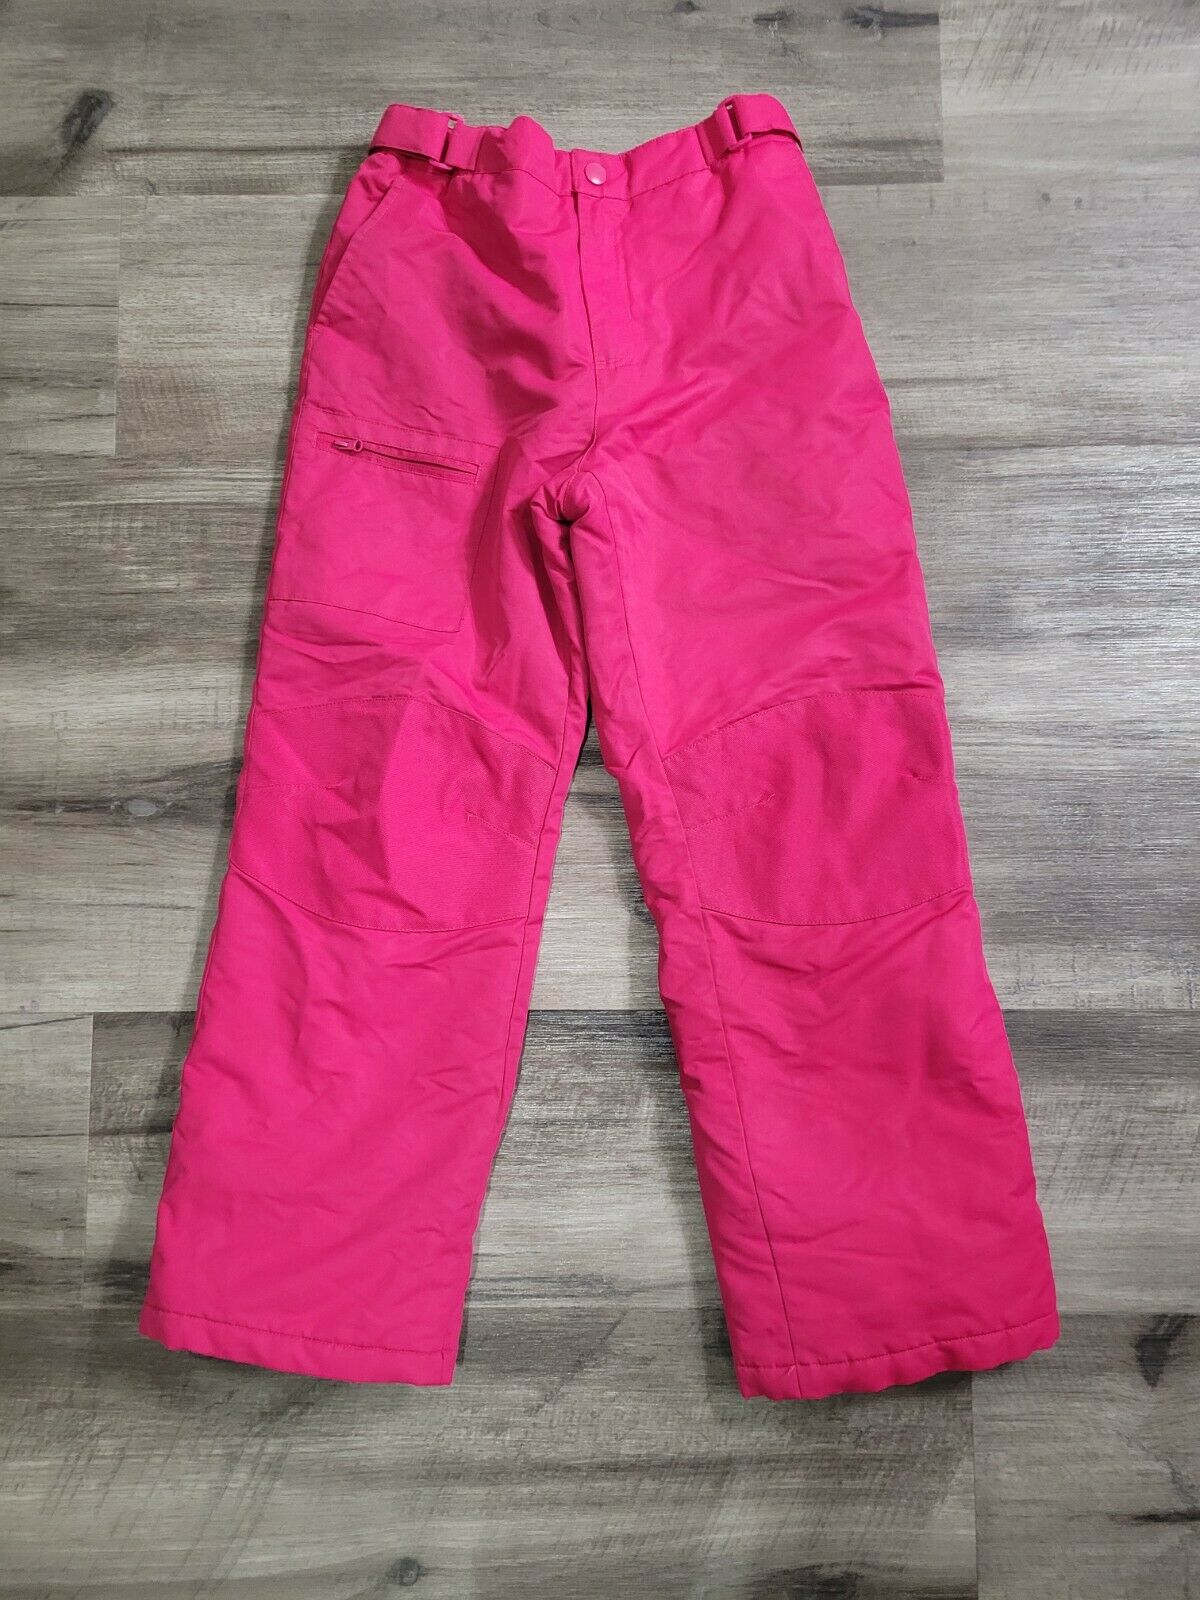 Swisstech Girls 10-12 Snow Pants Pink Adjustable Ski Pants